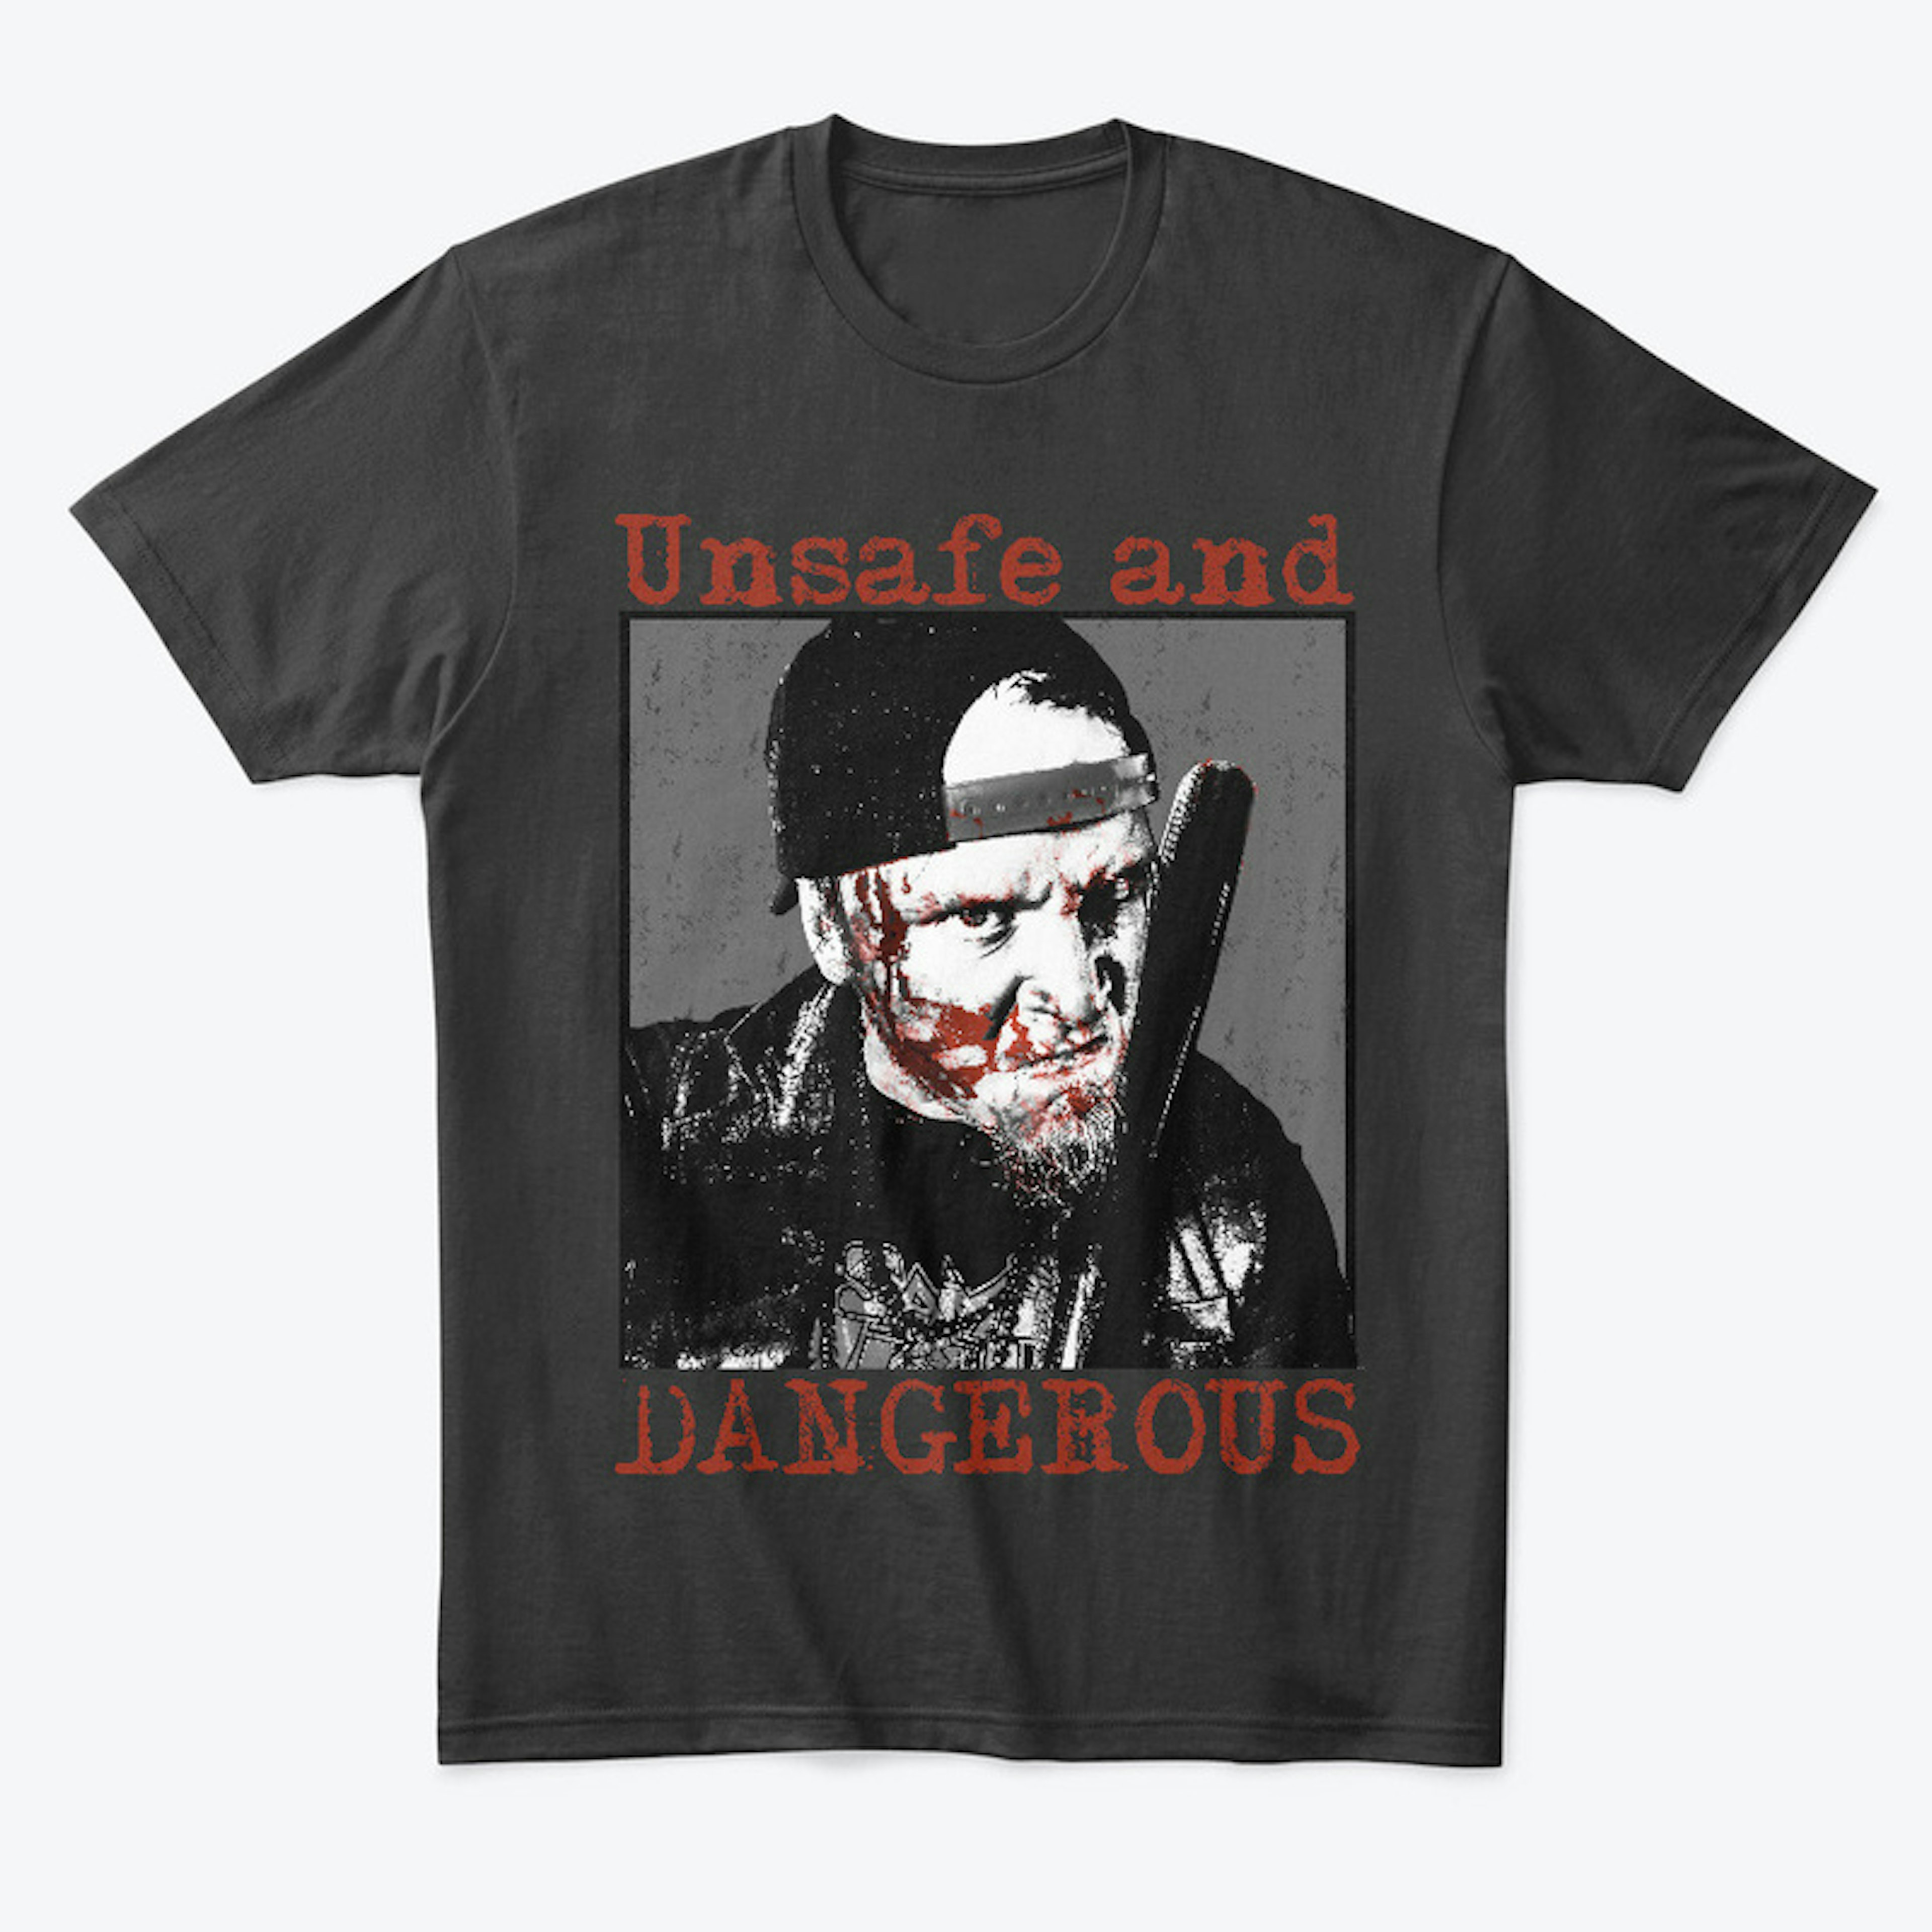 Unsafe & Dangerous - Soft Style Shirt